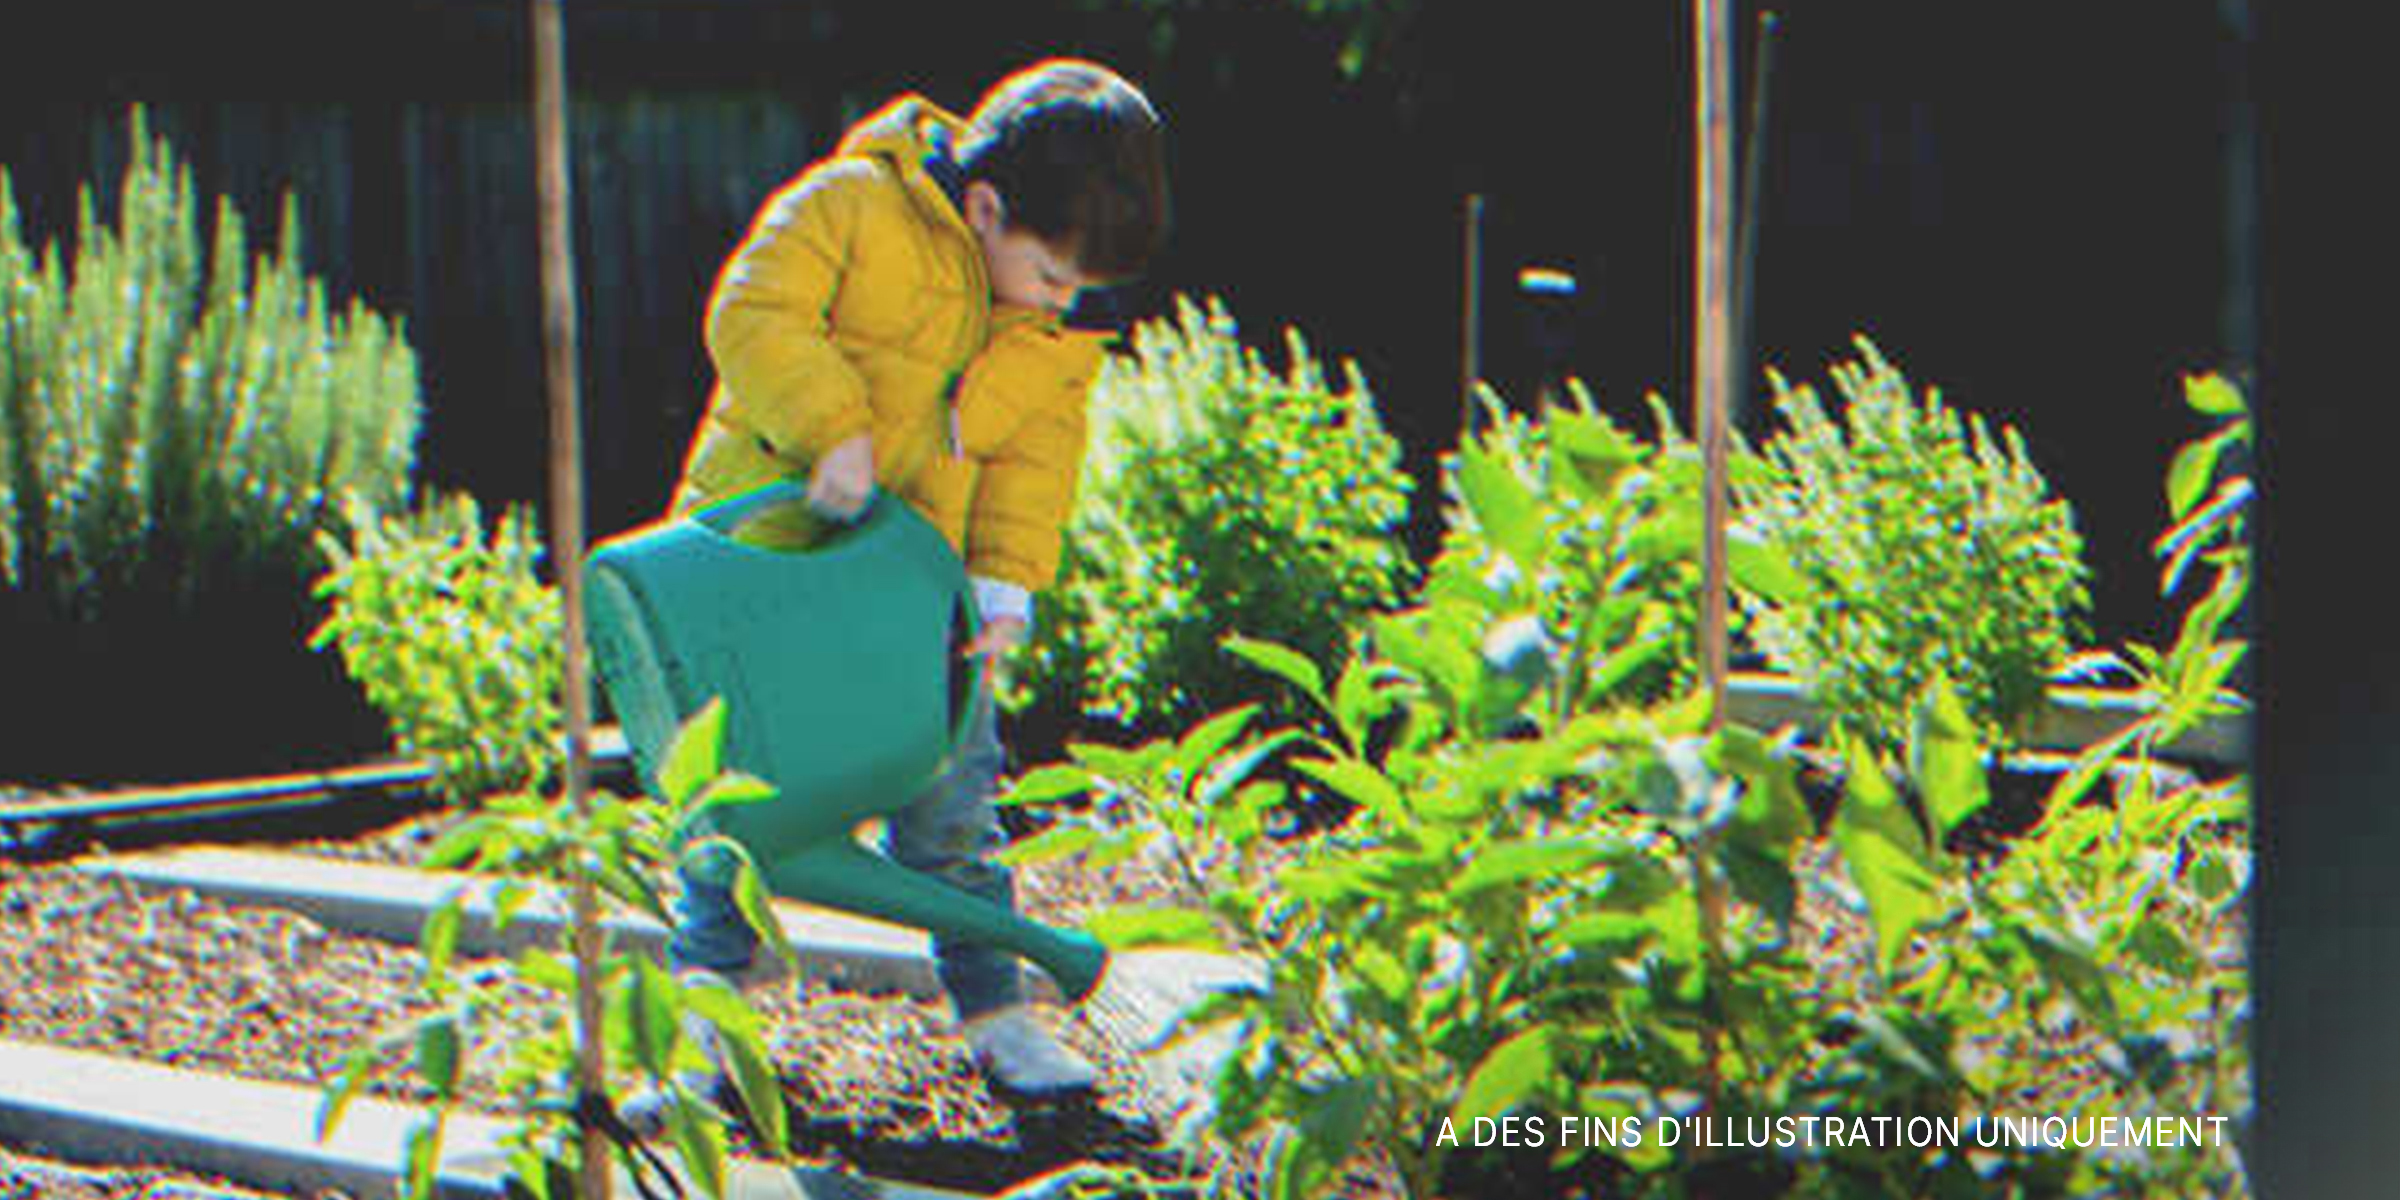 Un garçon qui arrose une plante | Source : Shutterstock